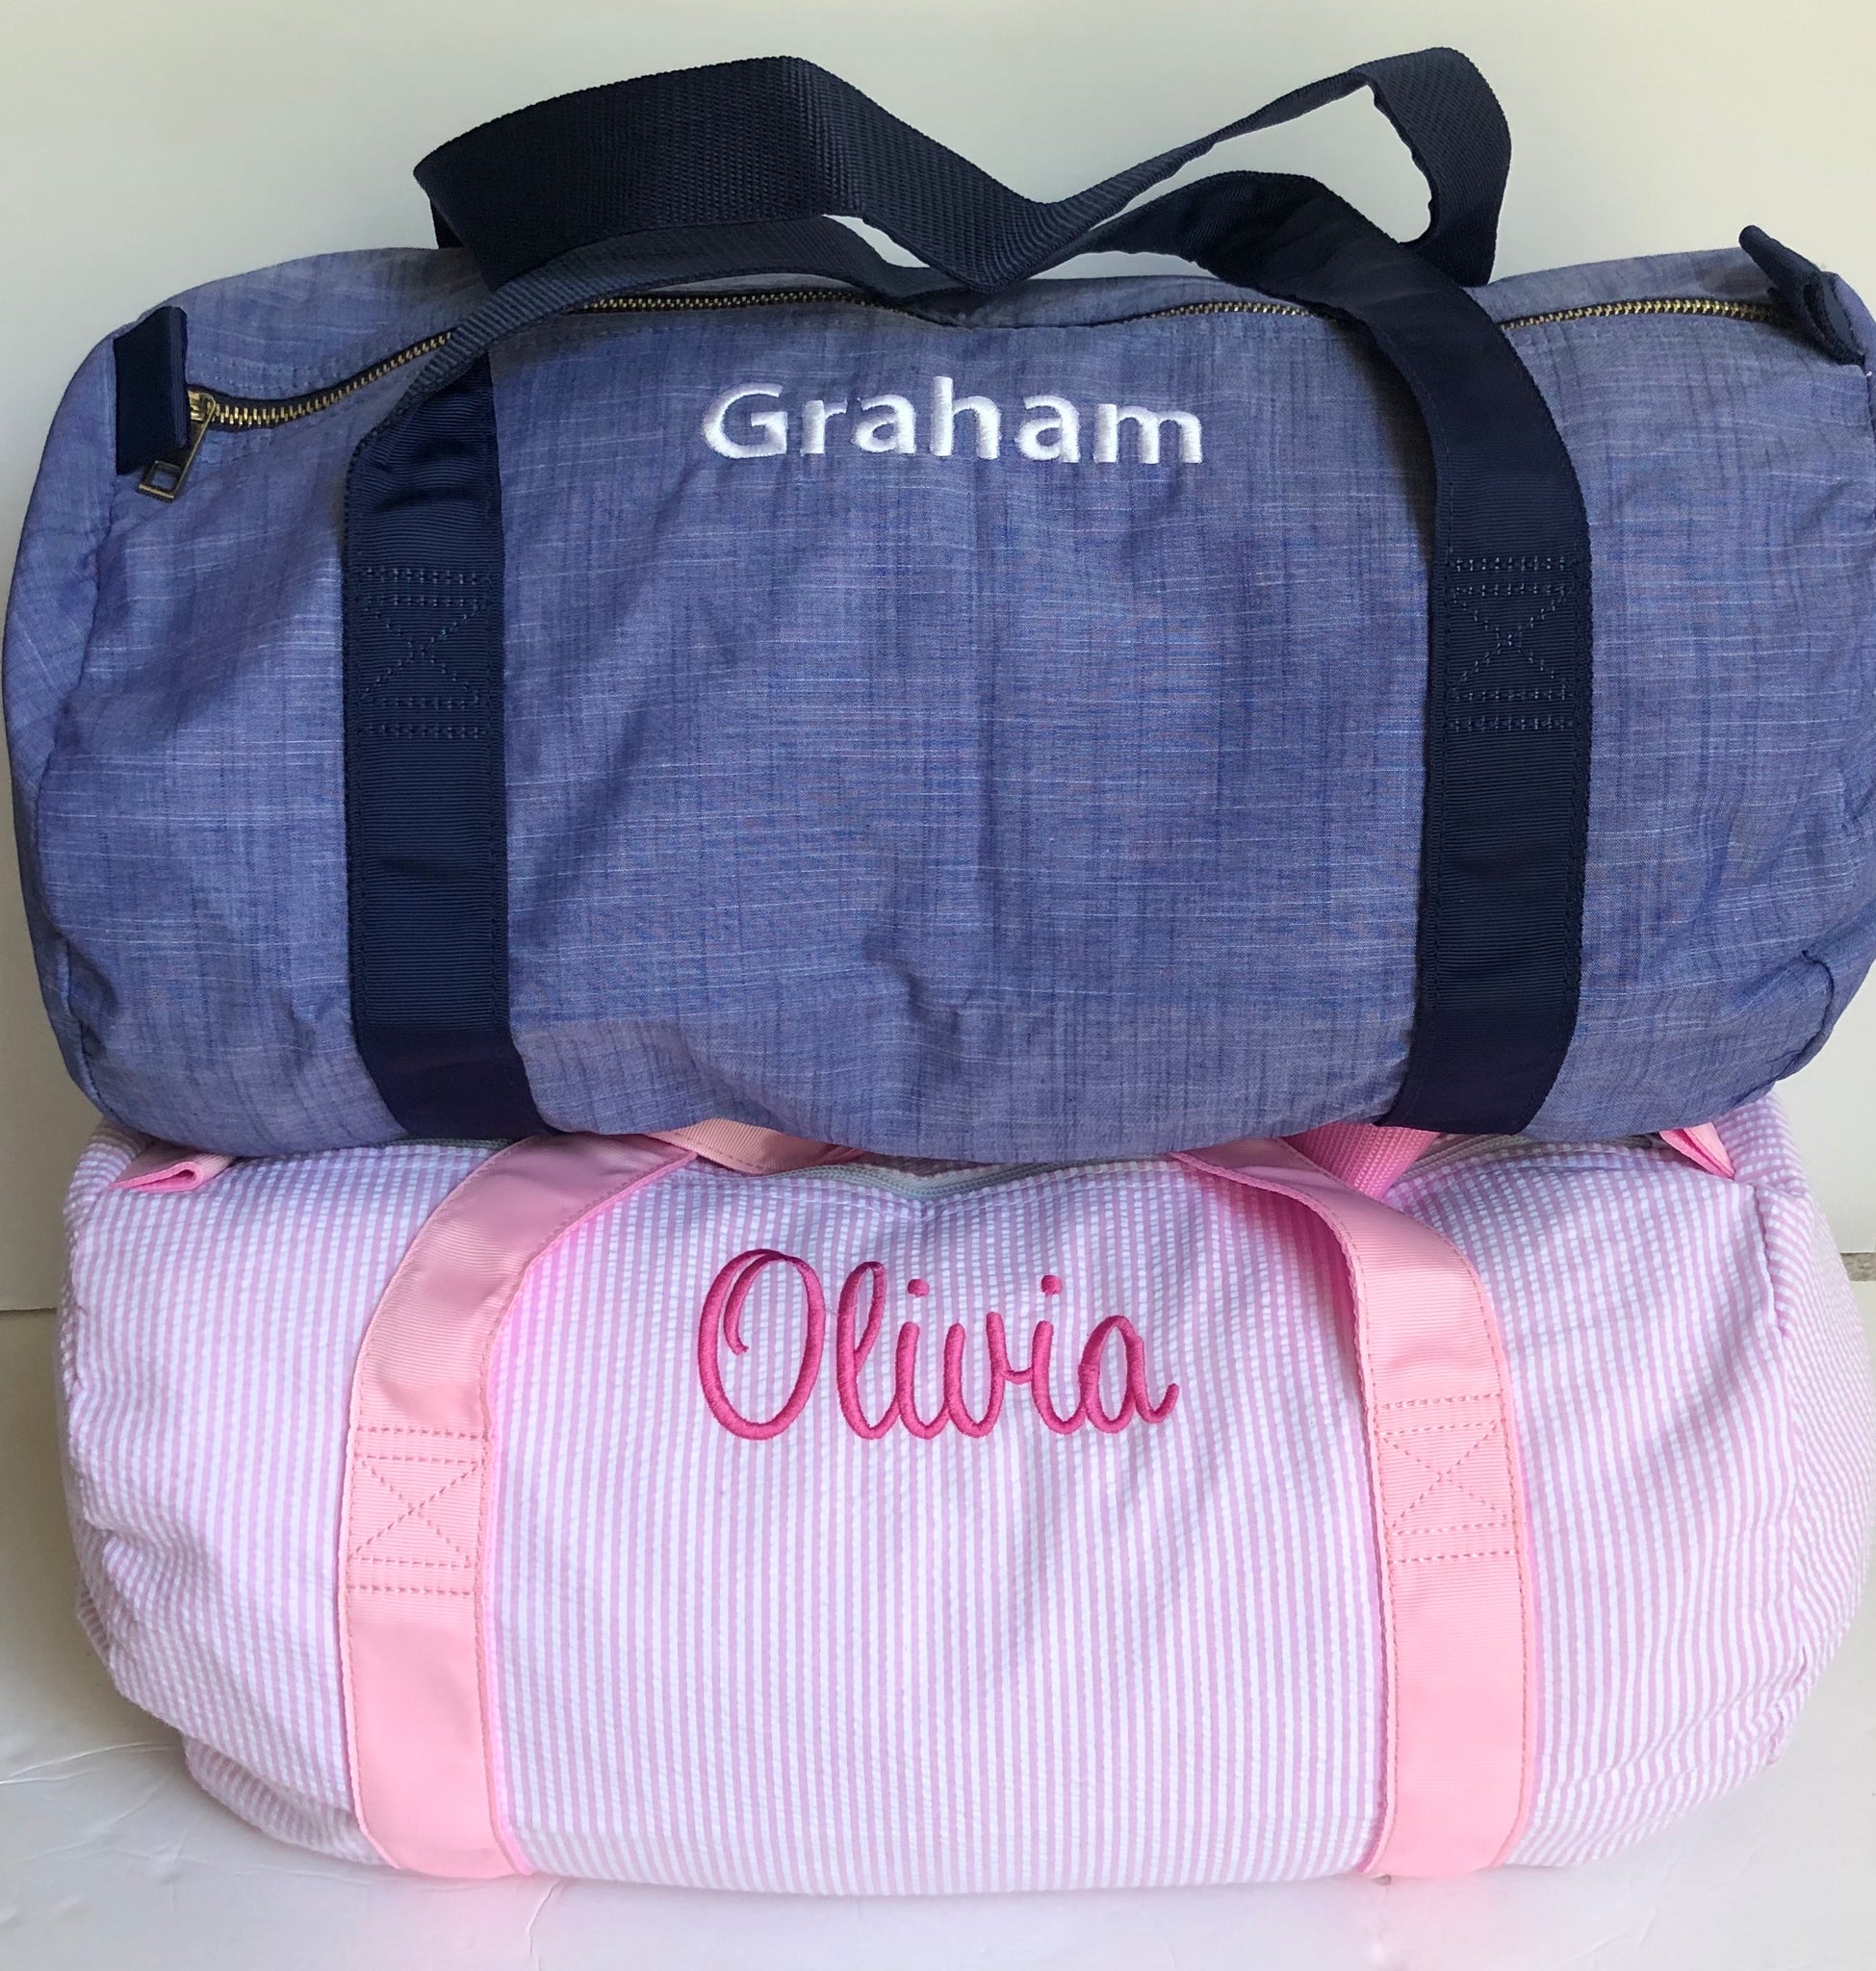 Monogrammed Duffle Bags & Travel Bags